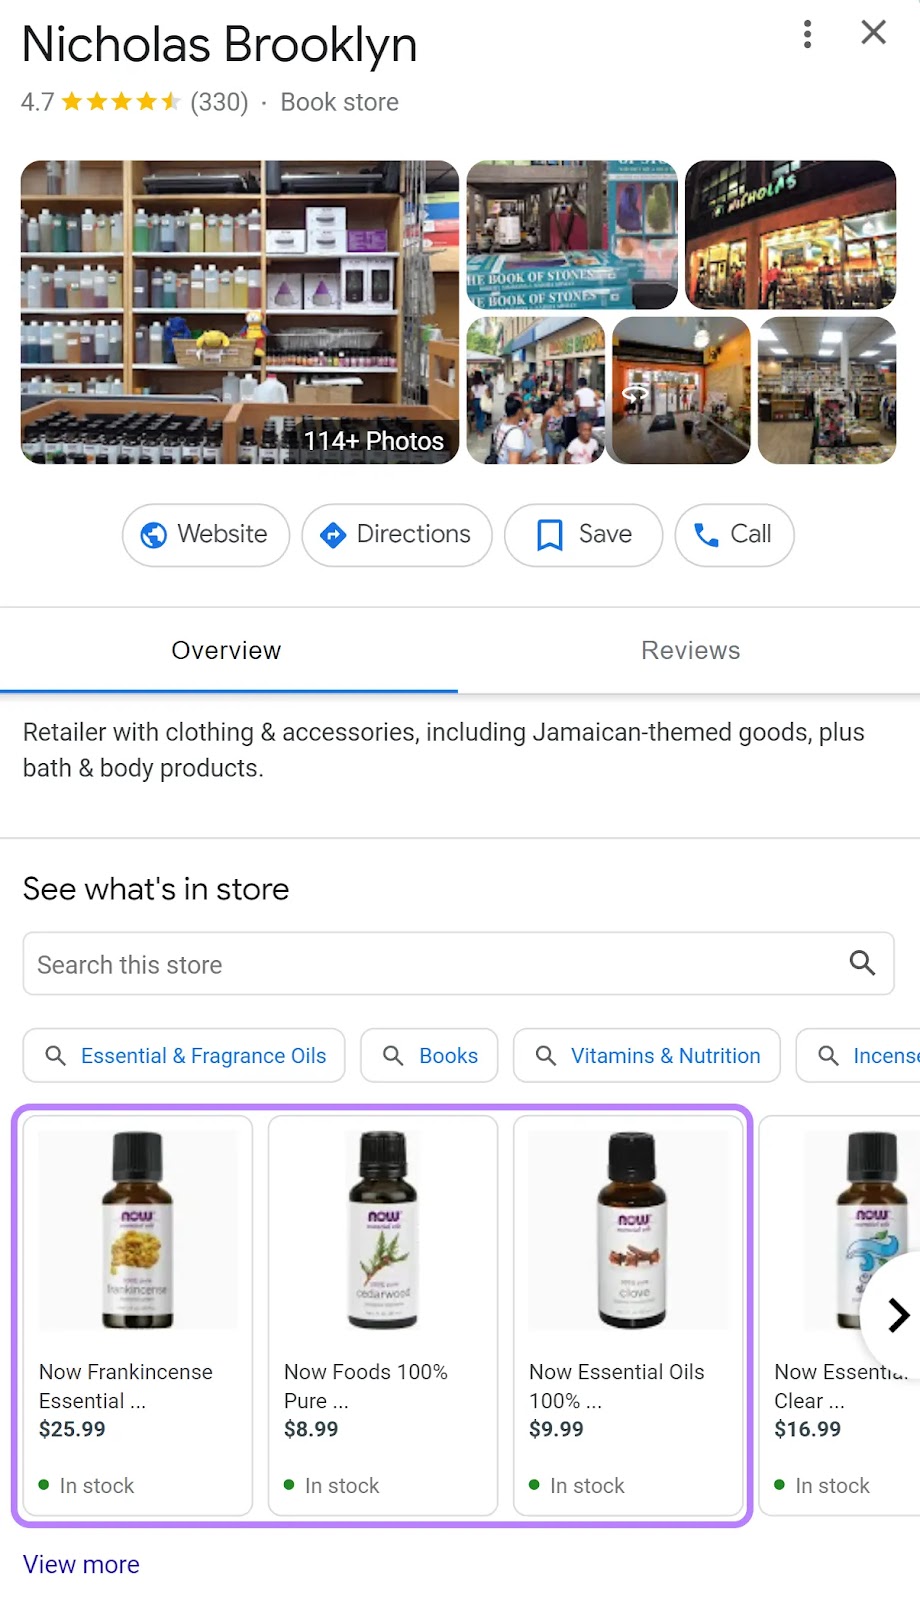 Nicholas Brooklyn's Google Business Profile product post